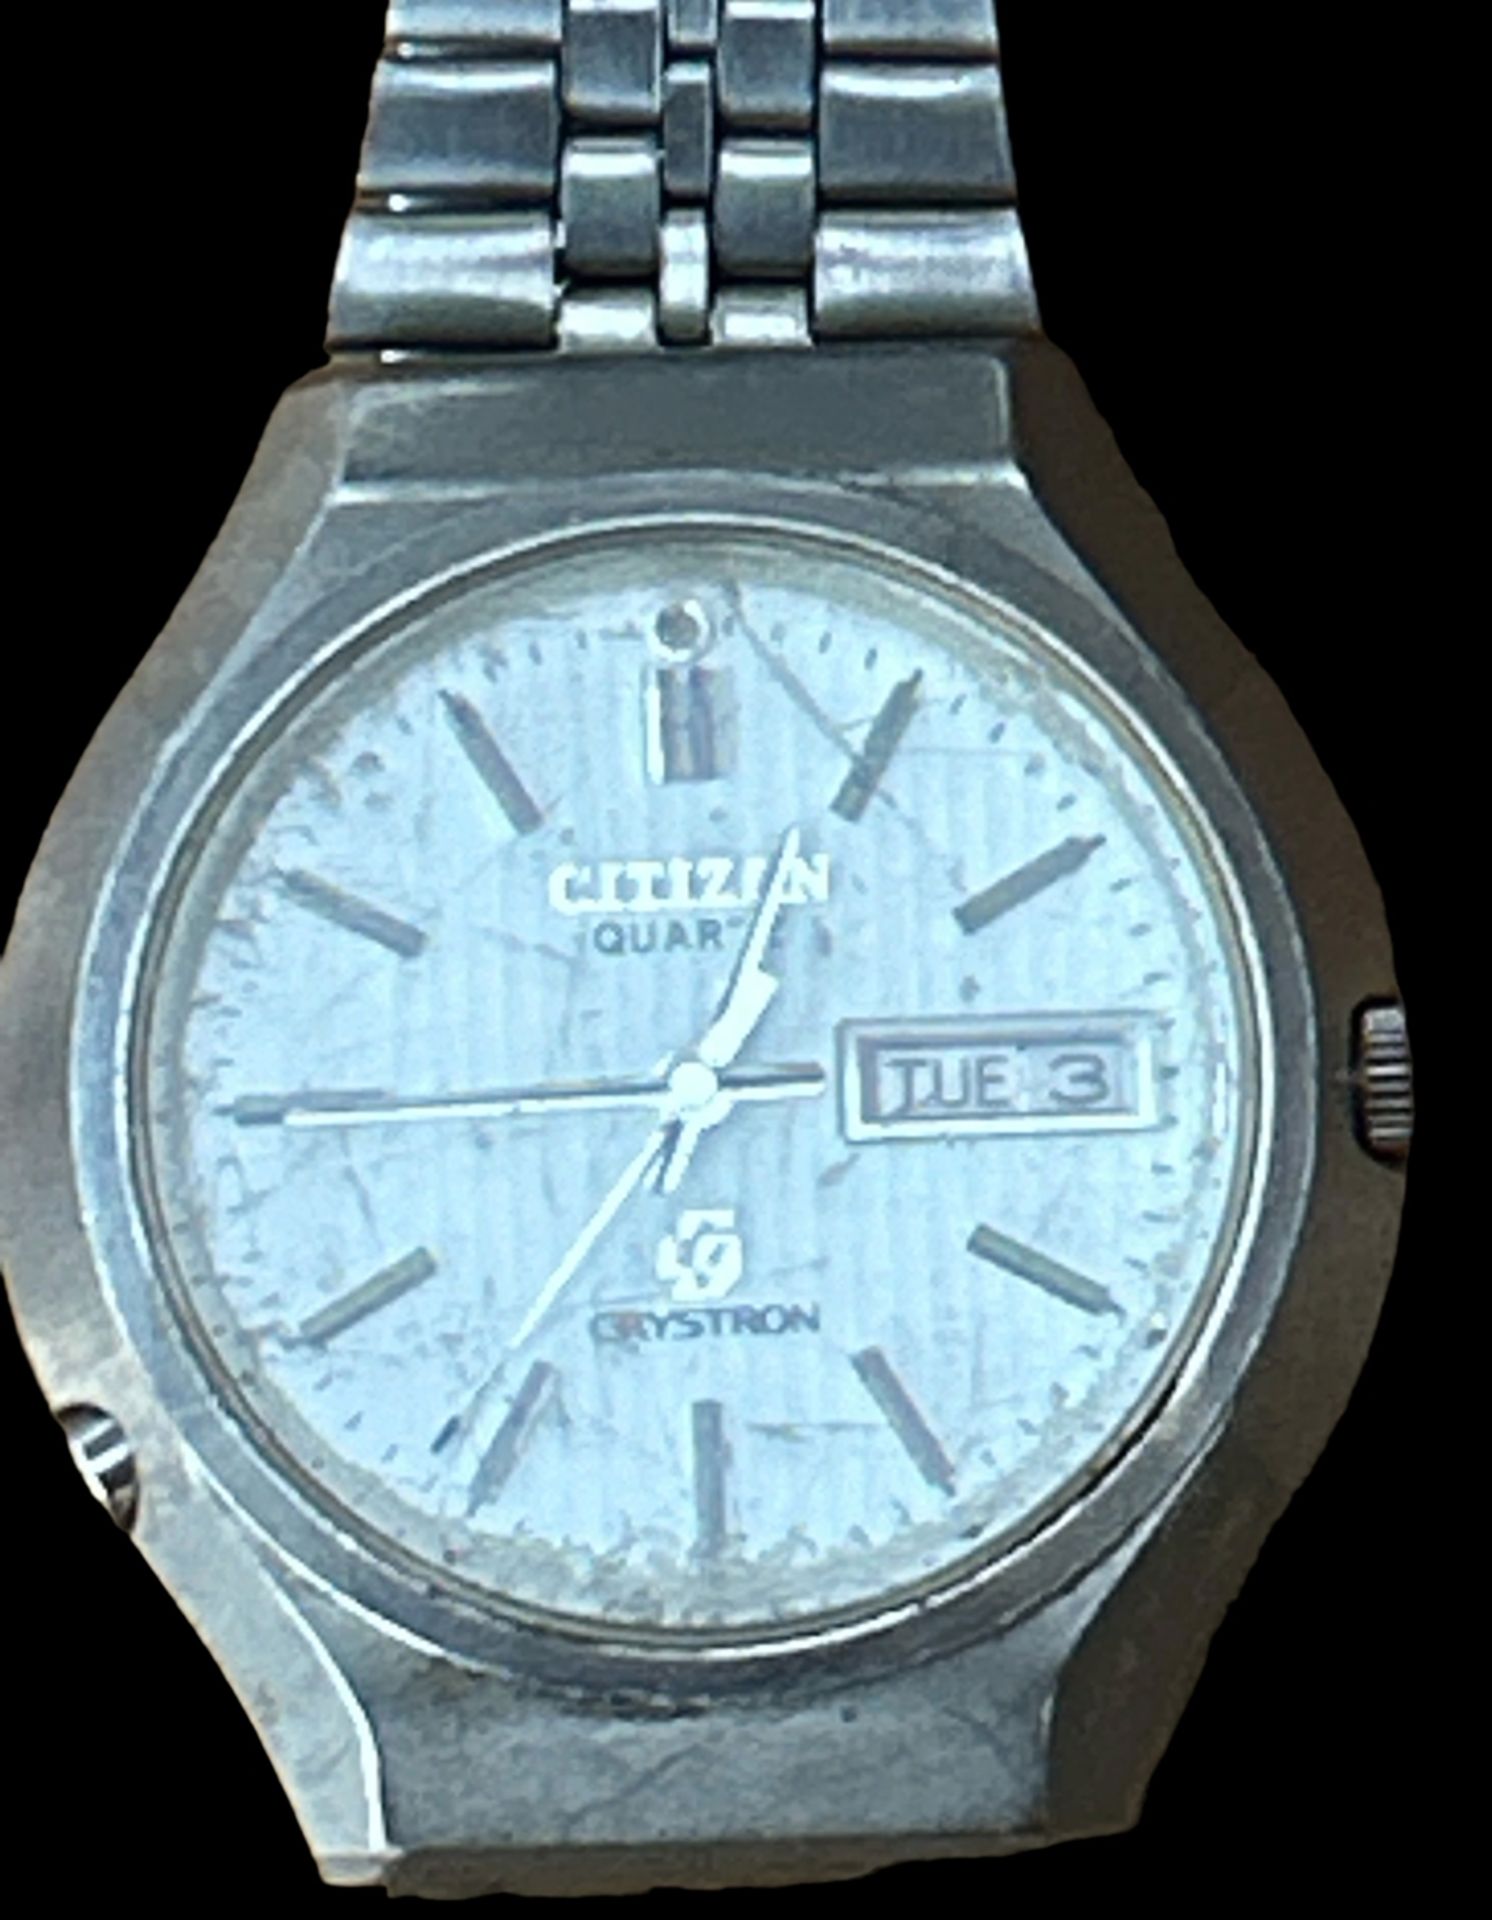 HAU "Citizen Crystron" frühe Quartz Armbanduhr, porig. Stahlband, Werk nicht überprüft - Image 2 of 3